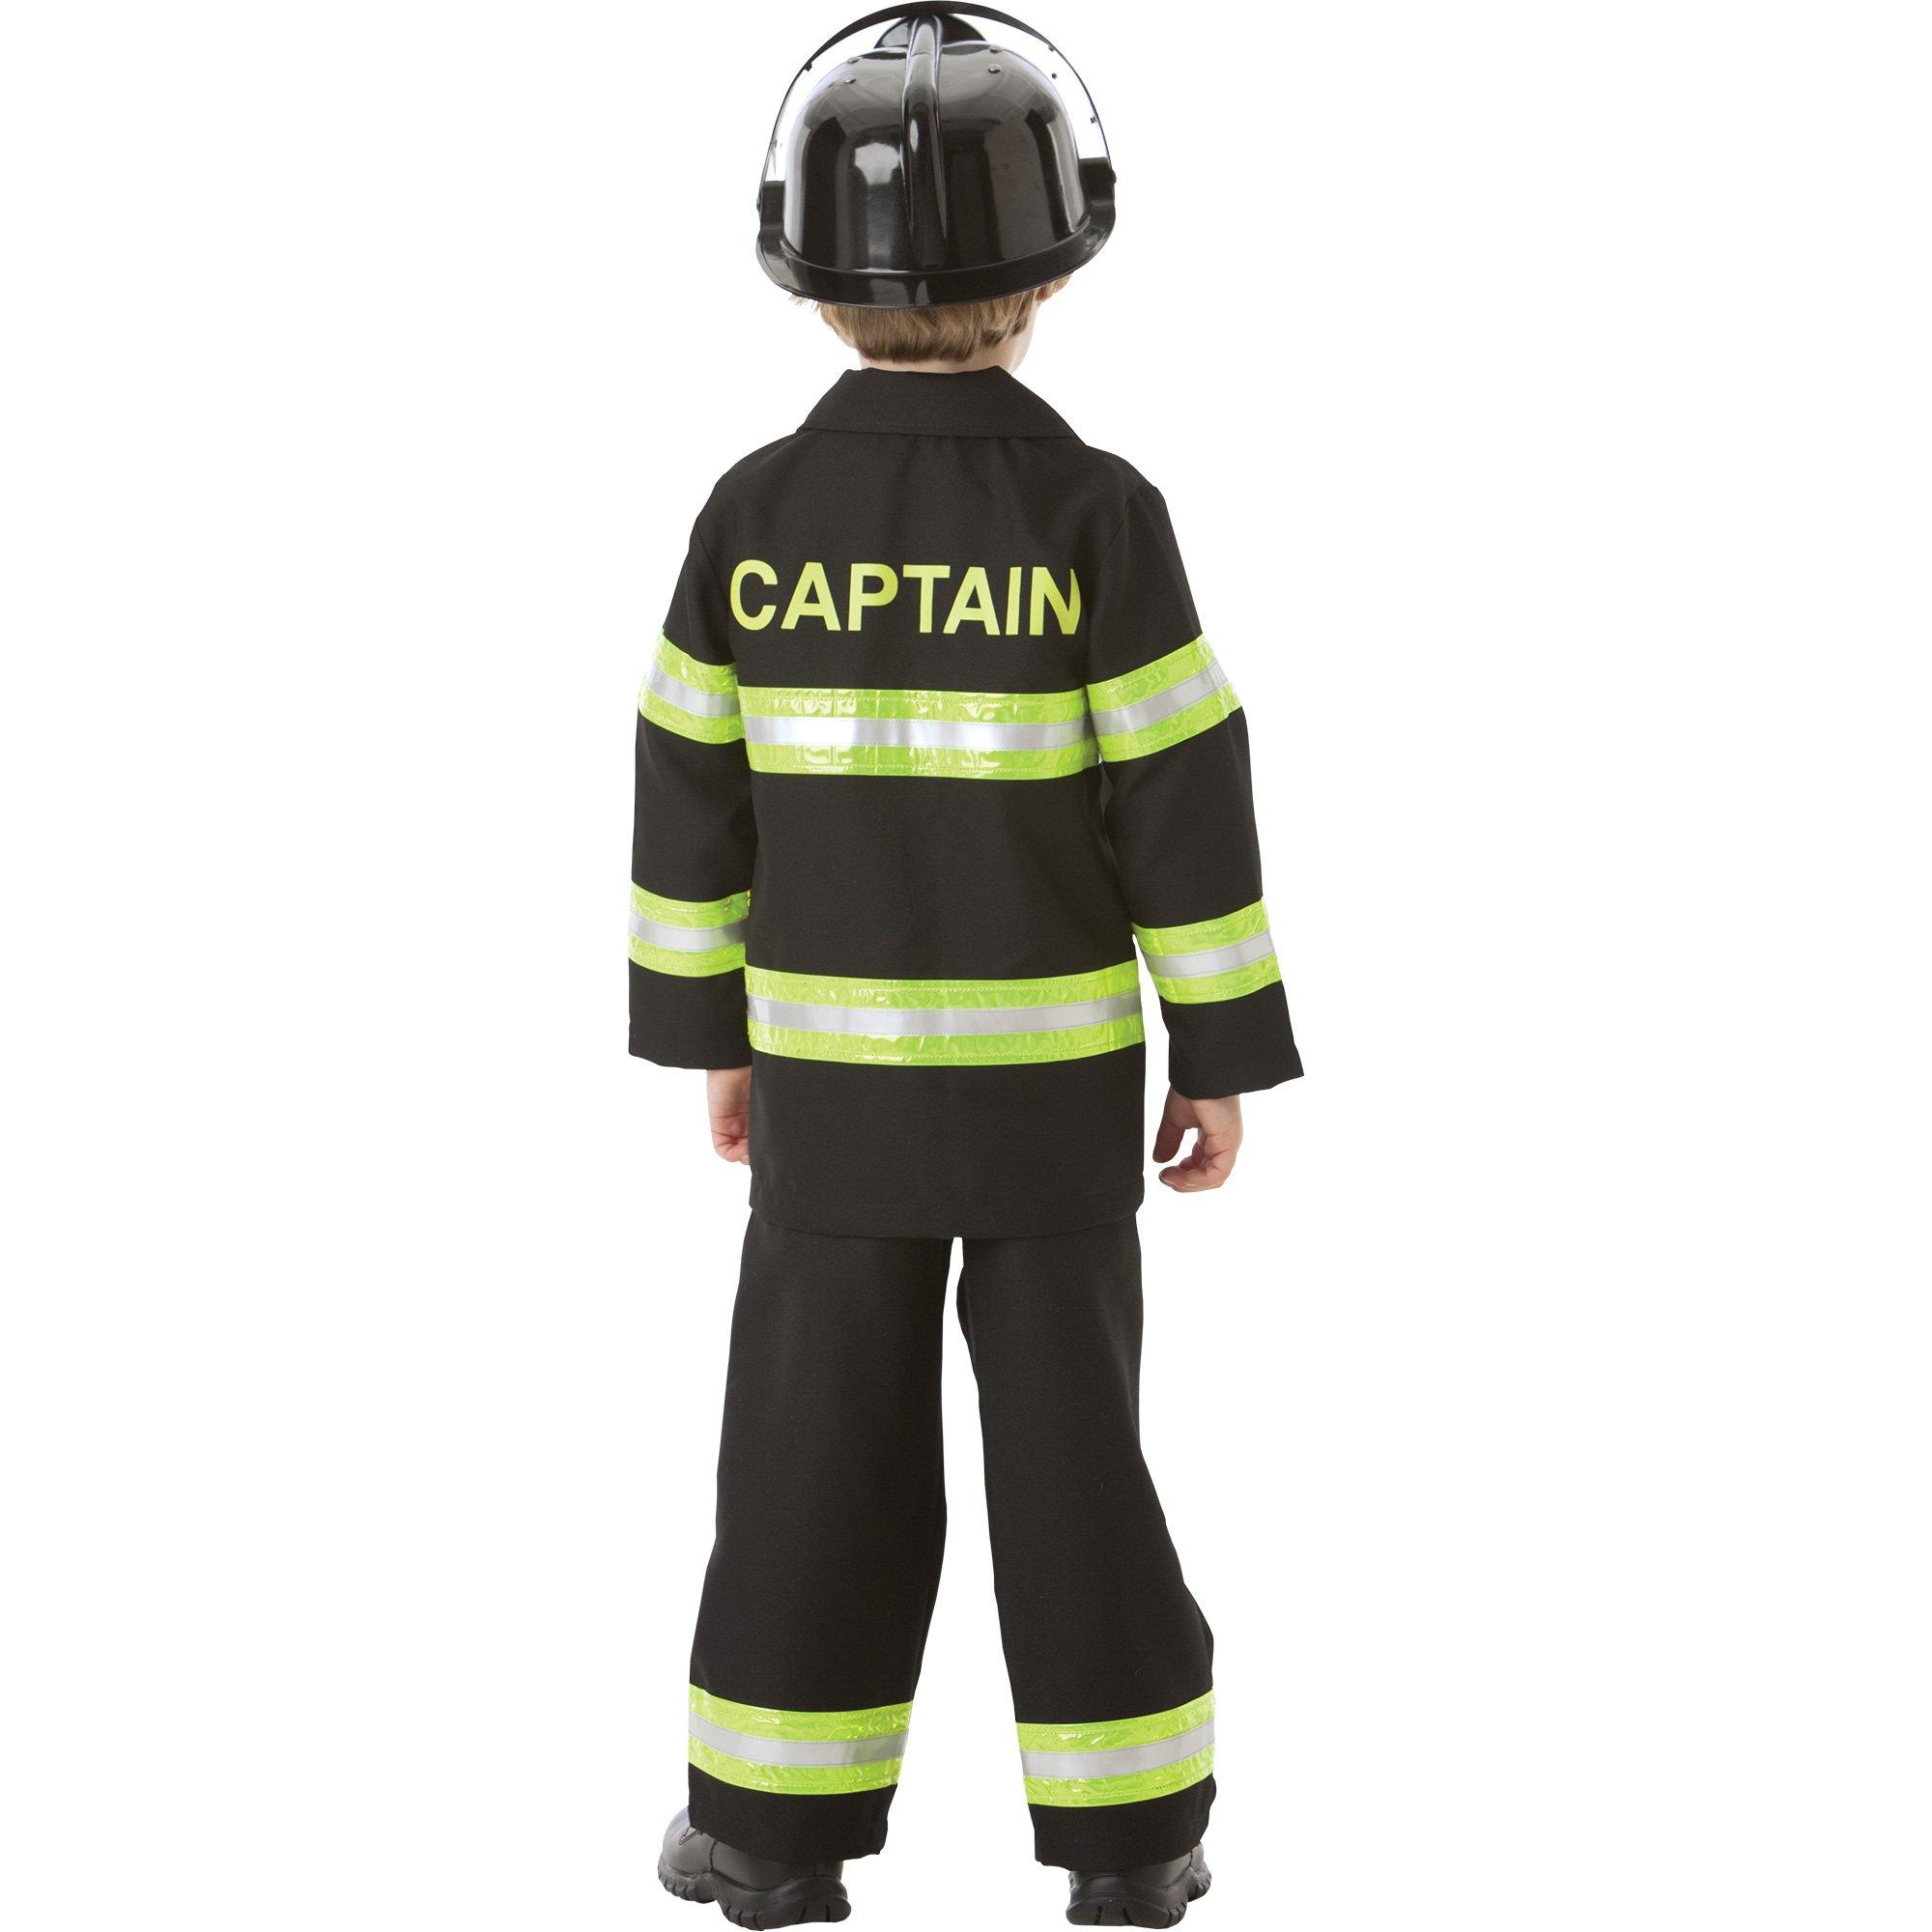 Boys Reflective Firefighter Costume